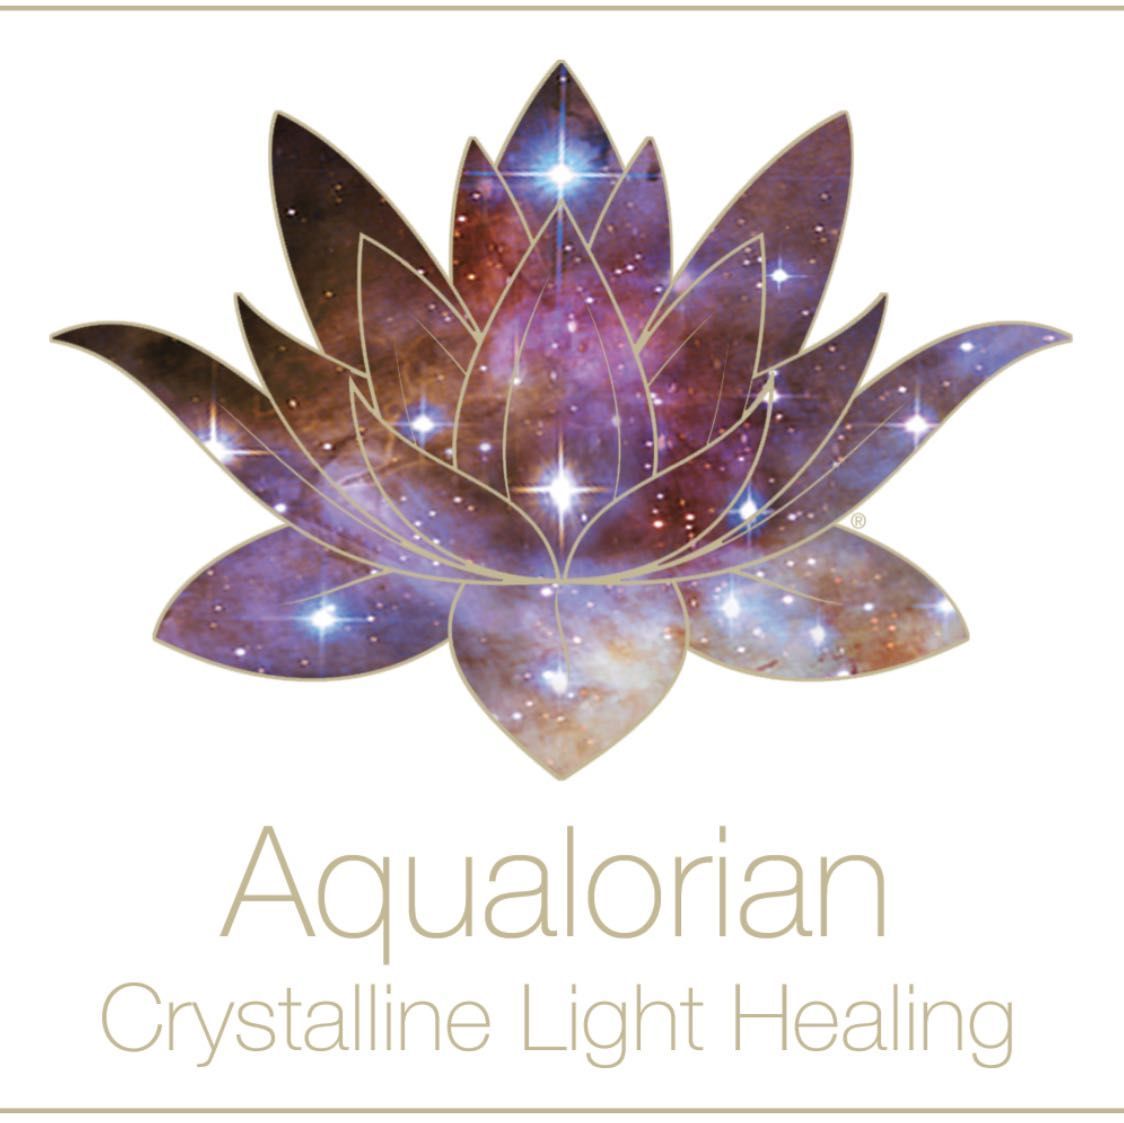 Aqualorian Crystalline Light Healing Training is portfolio